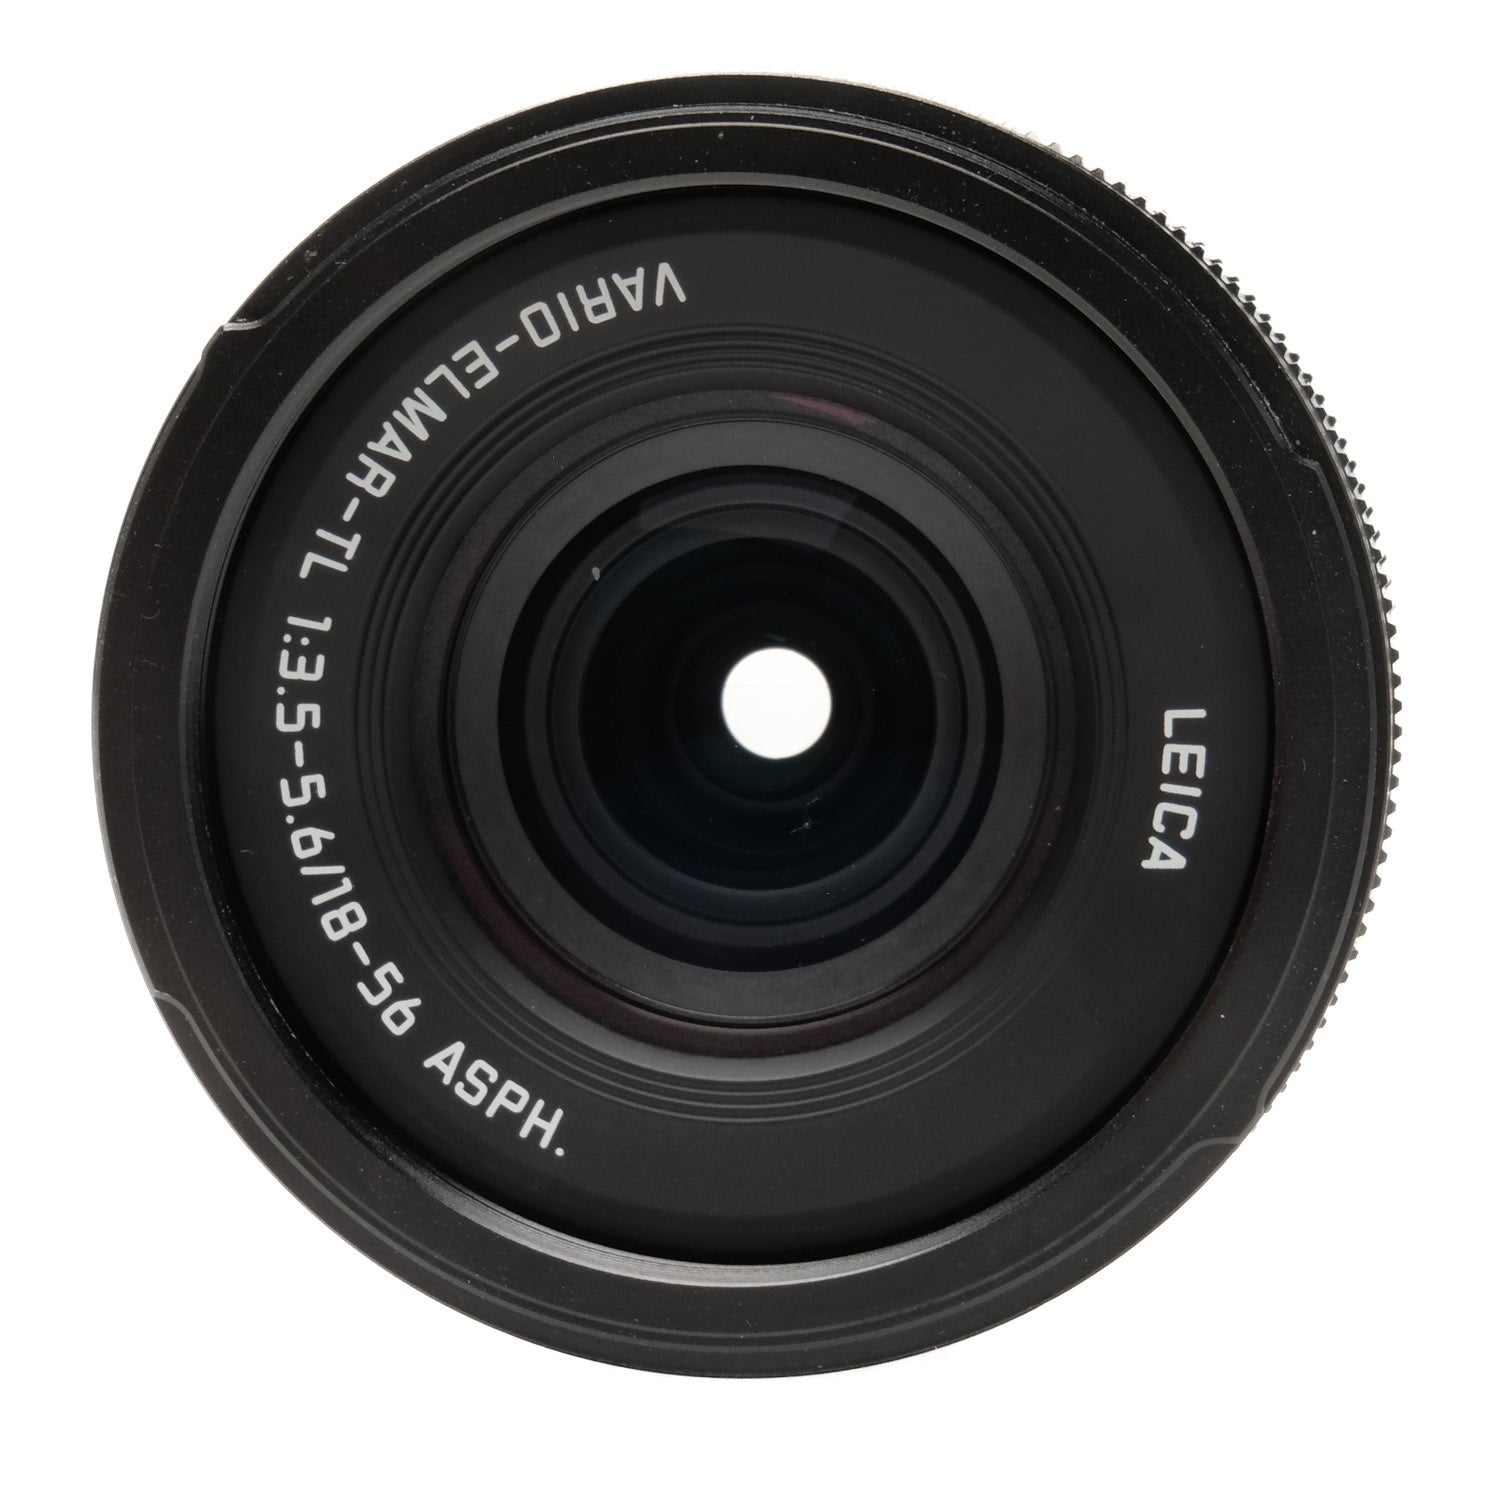 Leica 18-56mm f3.5-4.5 4353280